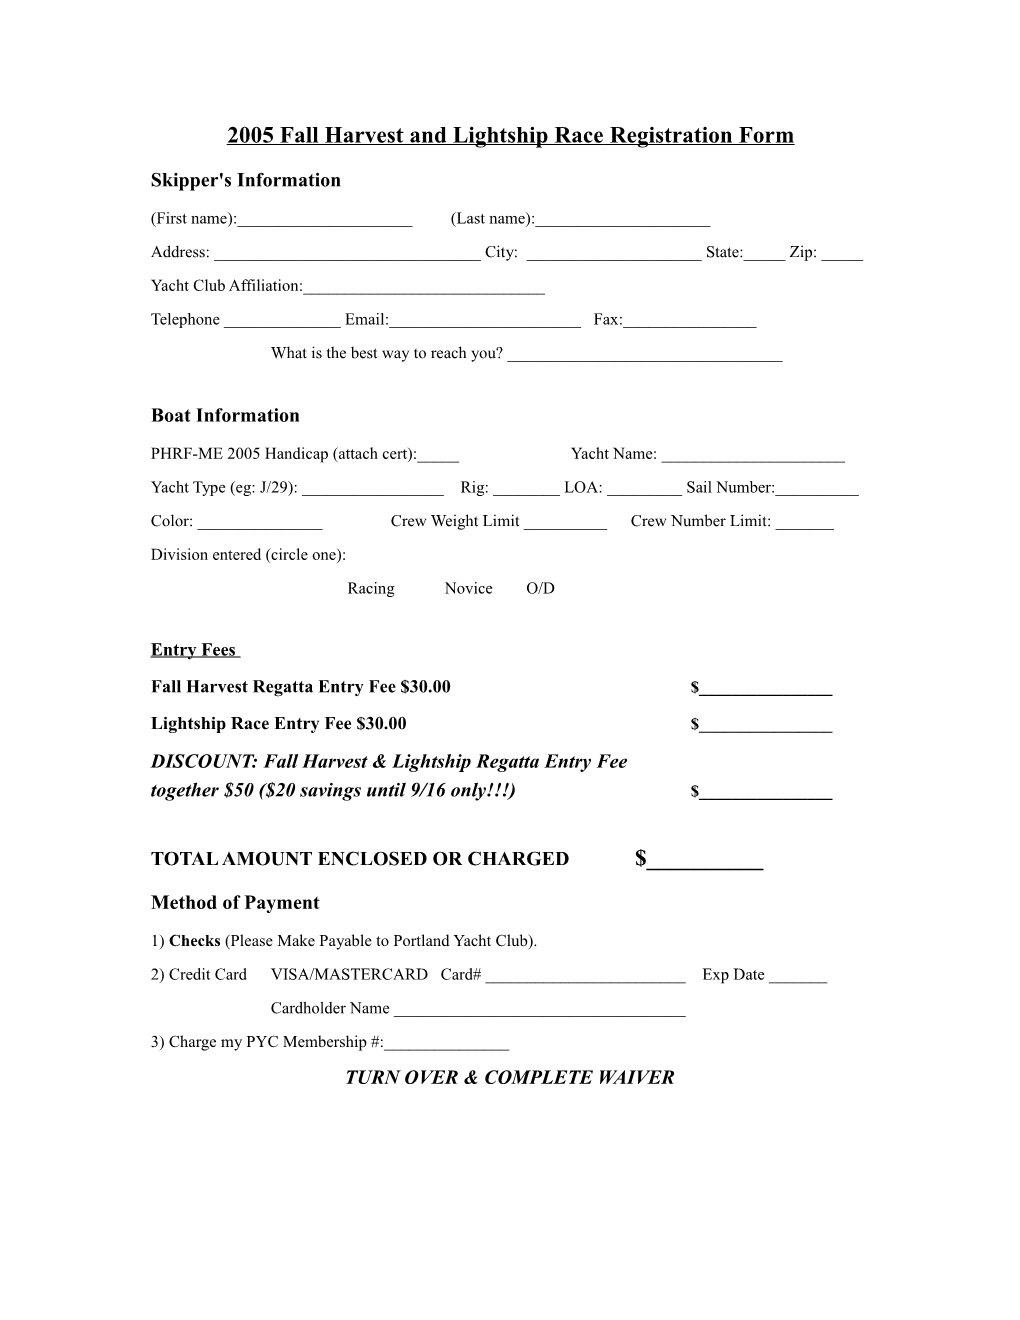 2005 Pilot & PHRF/One Design Registration Form